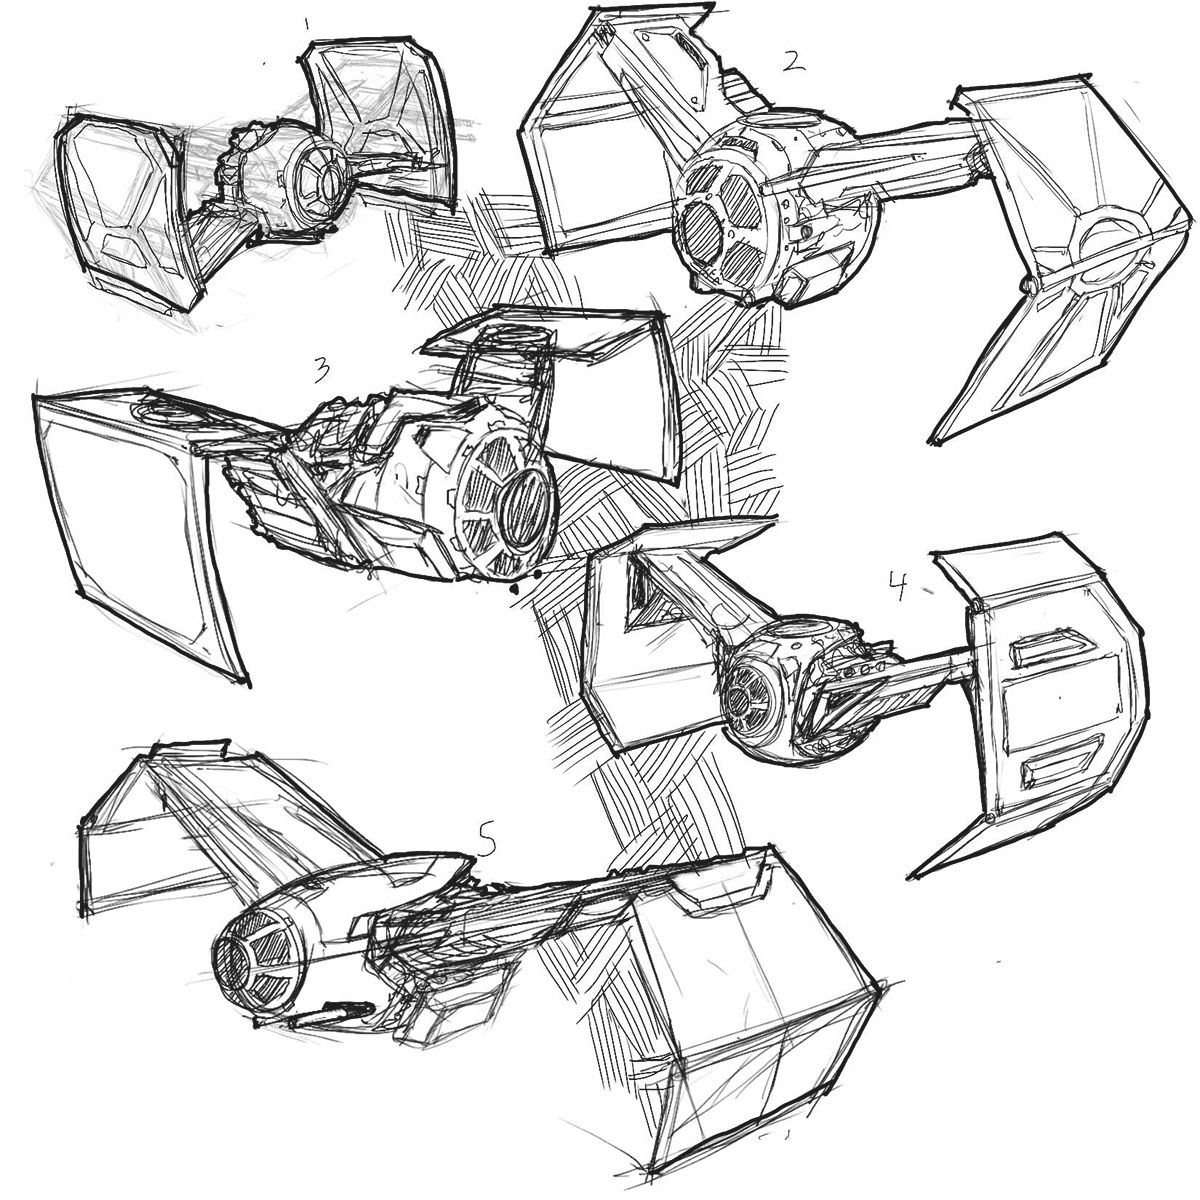 Starwars tiefighter conceptart sketches digitalart sketchbook